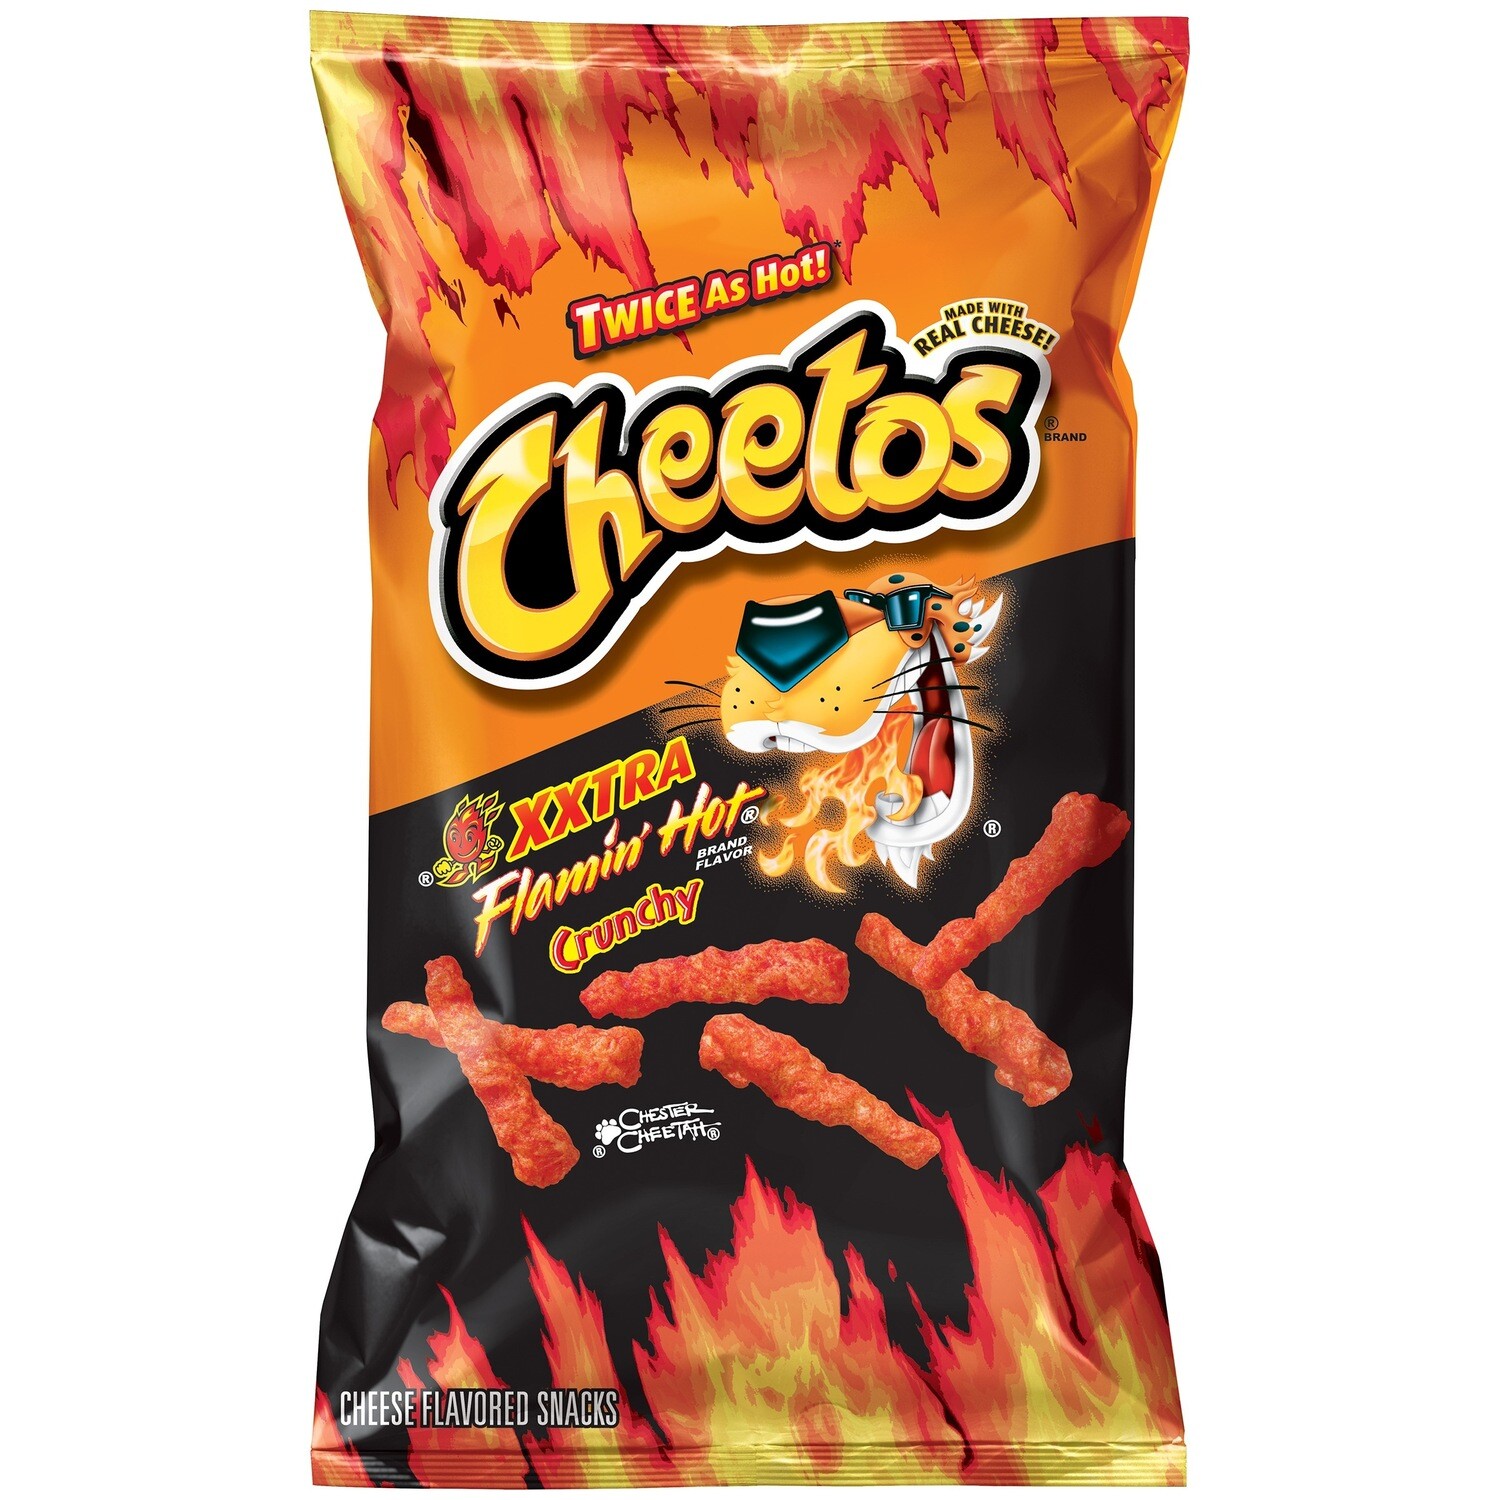 Cheetos XXTRA Flamin Hot Crunchy